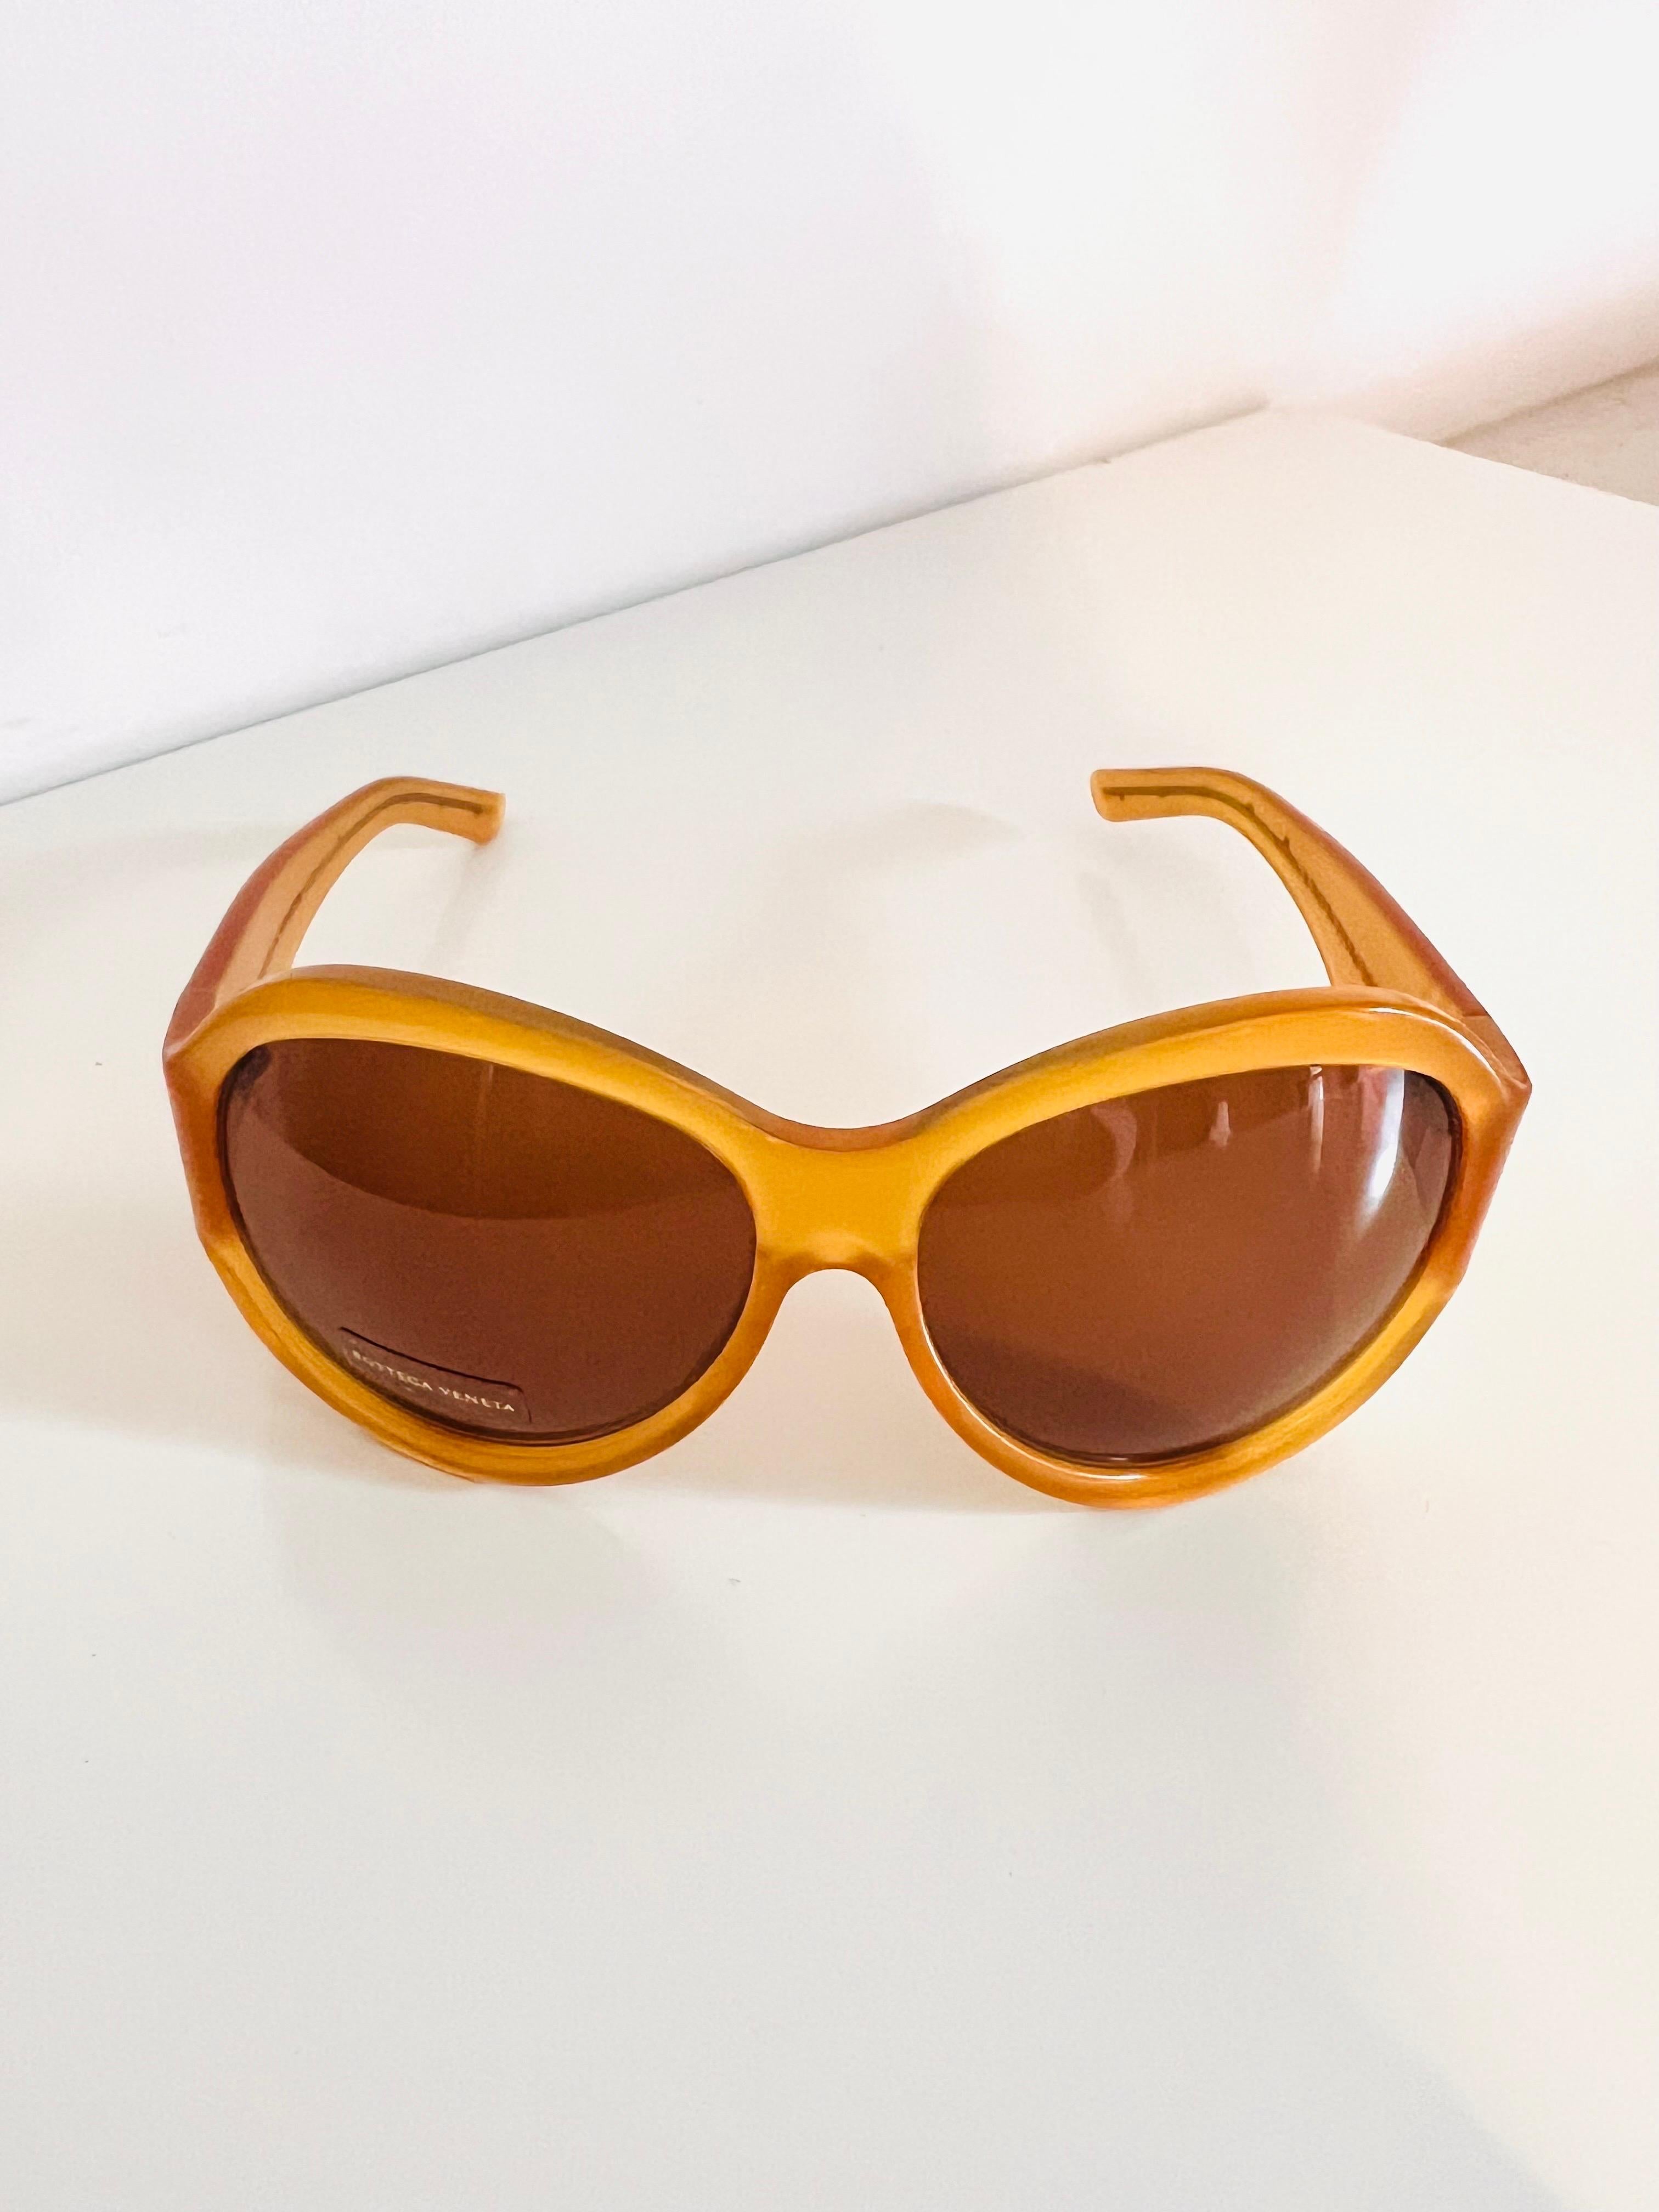 Vintage 1990s Bottega Veneta sunglasses in honey colour with butterfly detail For Sale 3